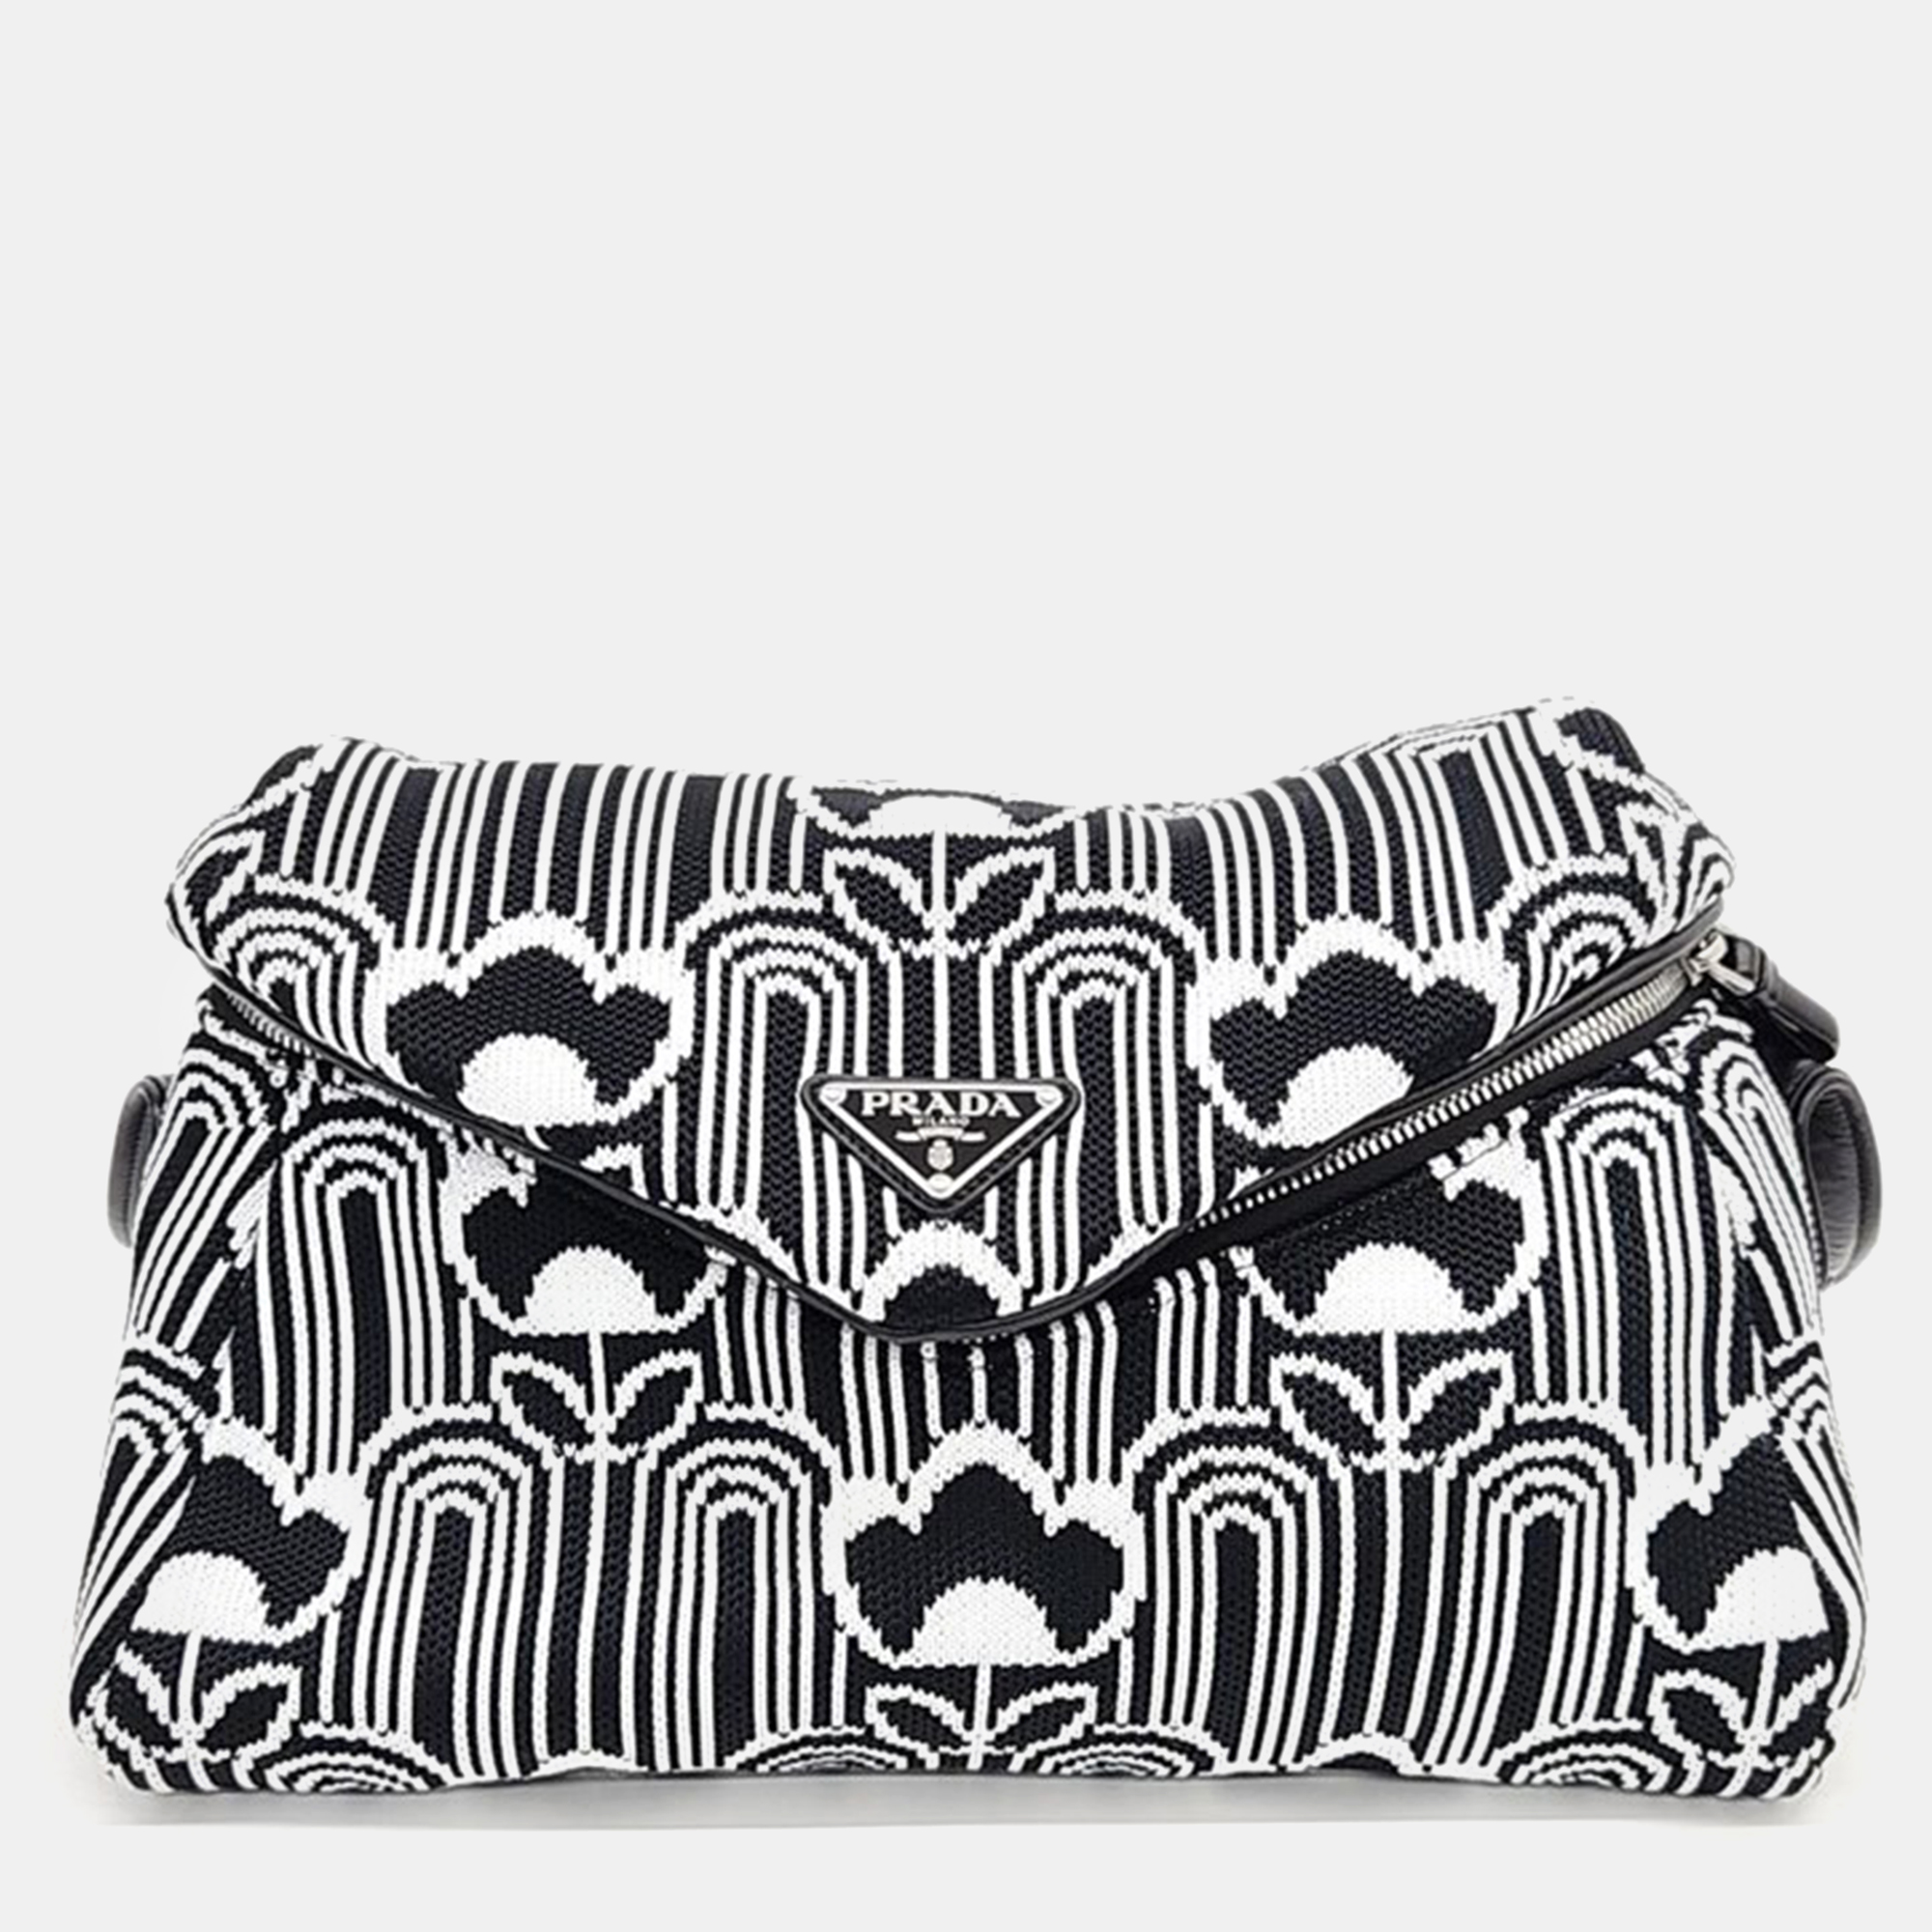 Prada black/white jacquard knit signaux shoulder bag